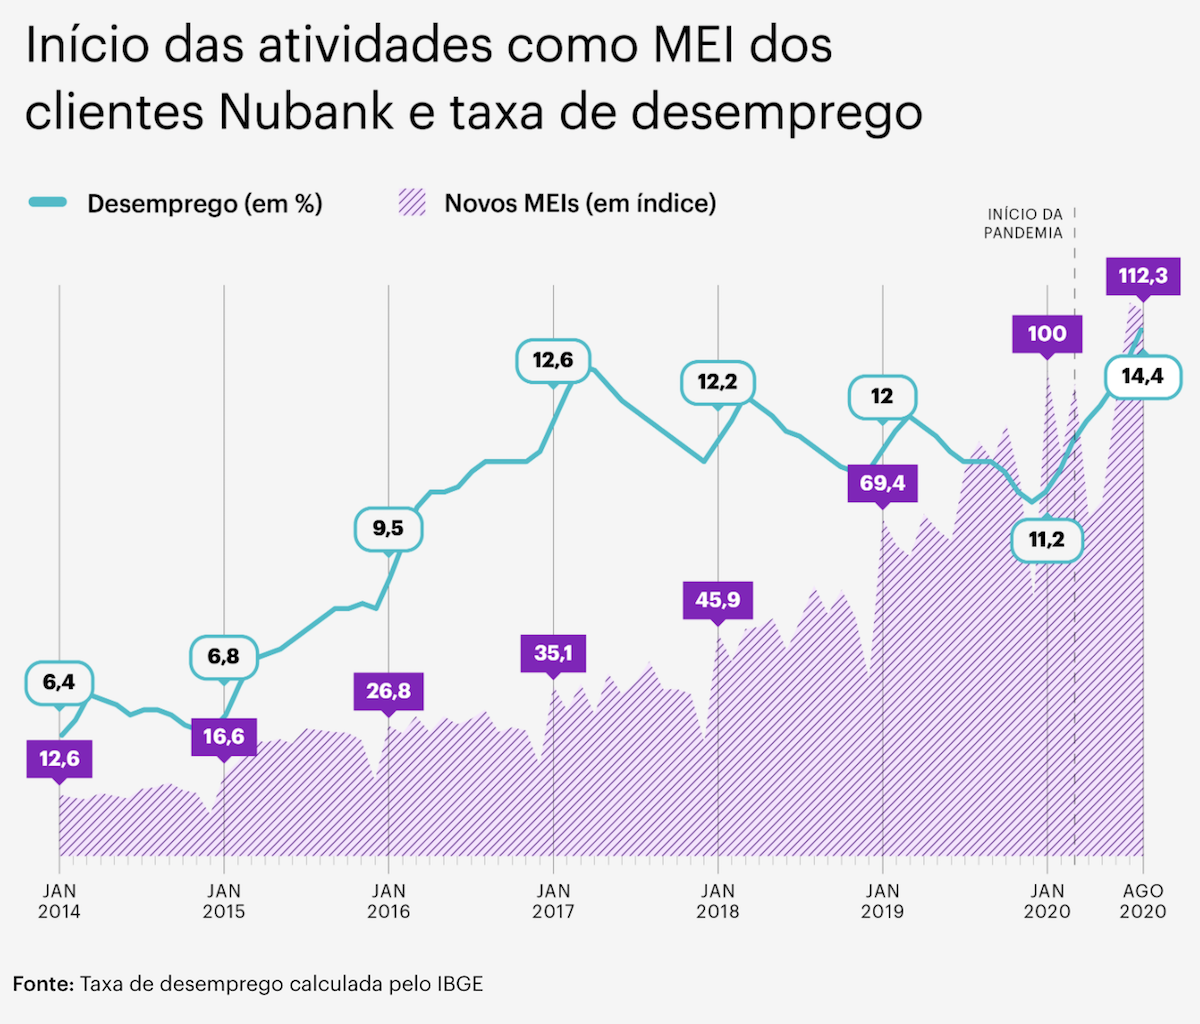 Data Nubank MEI: gráfico mostra início das atividades como MEI dos clientes Nubank e taxa de desemprego